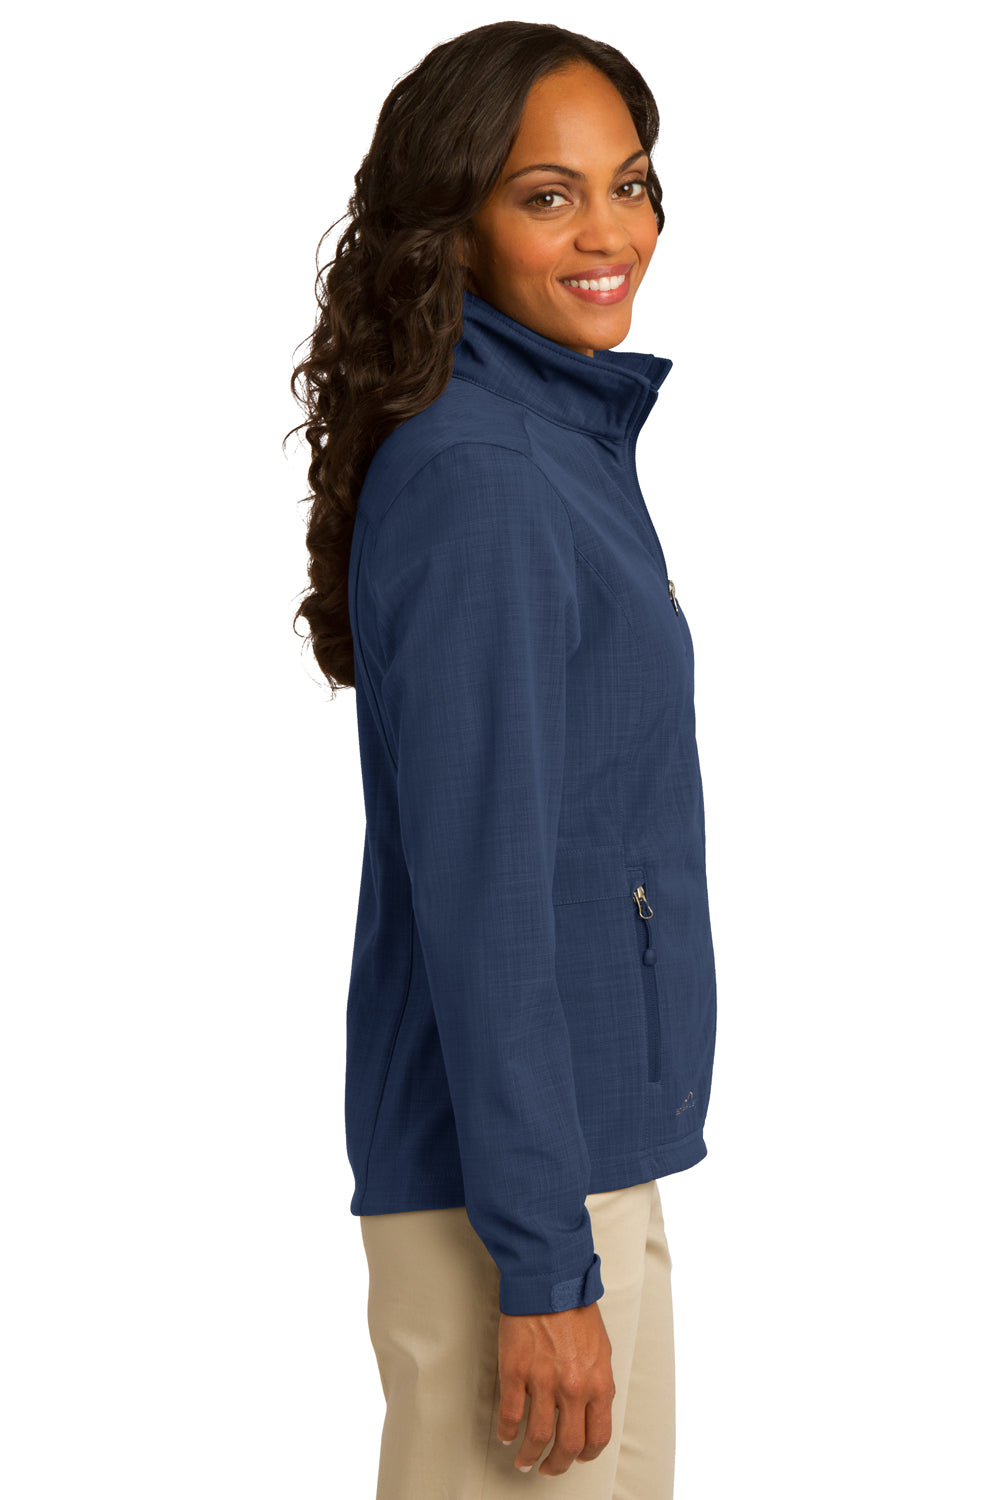 Eddie Bauer EB533 Womens Shaded Crosshatch Wind & Water Resistant Full Zip Jacket Blue Model Side